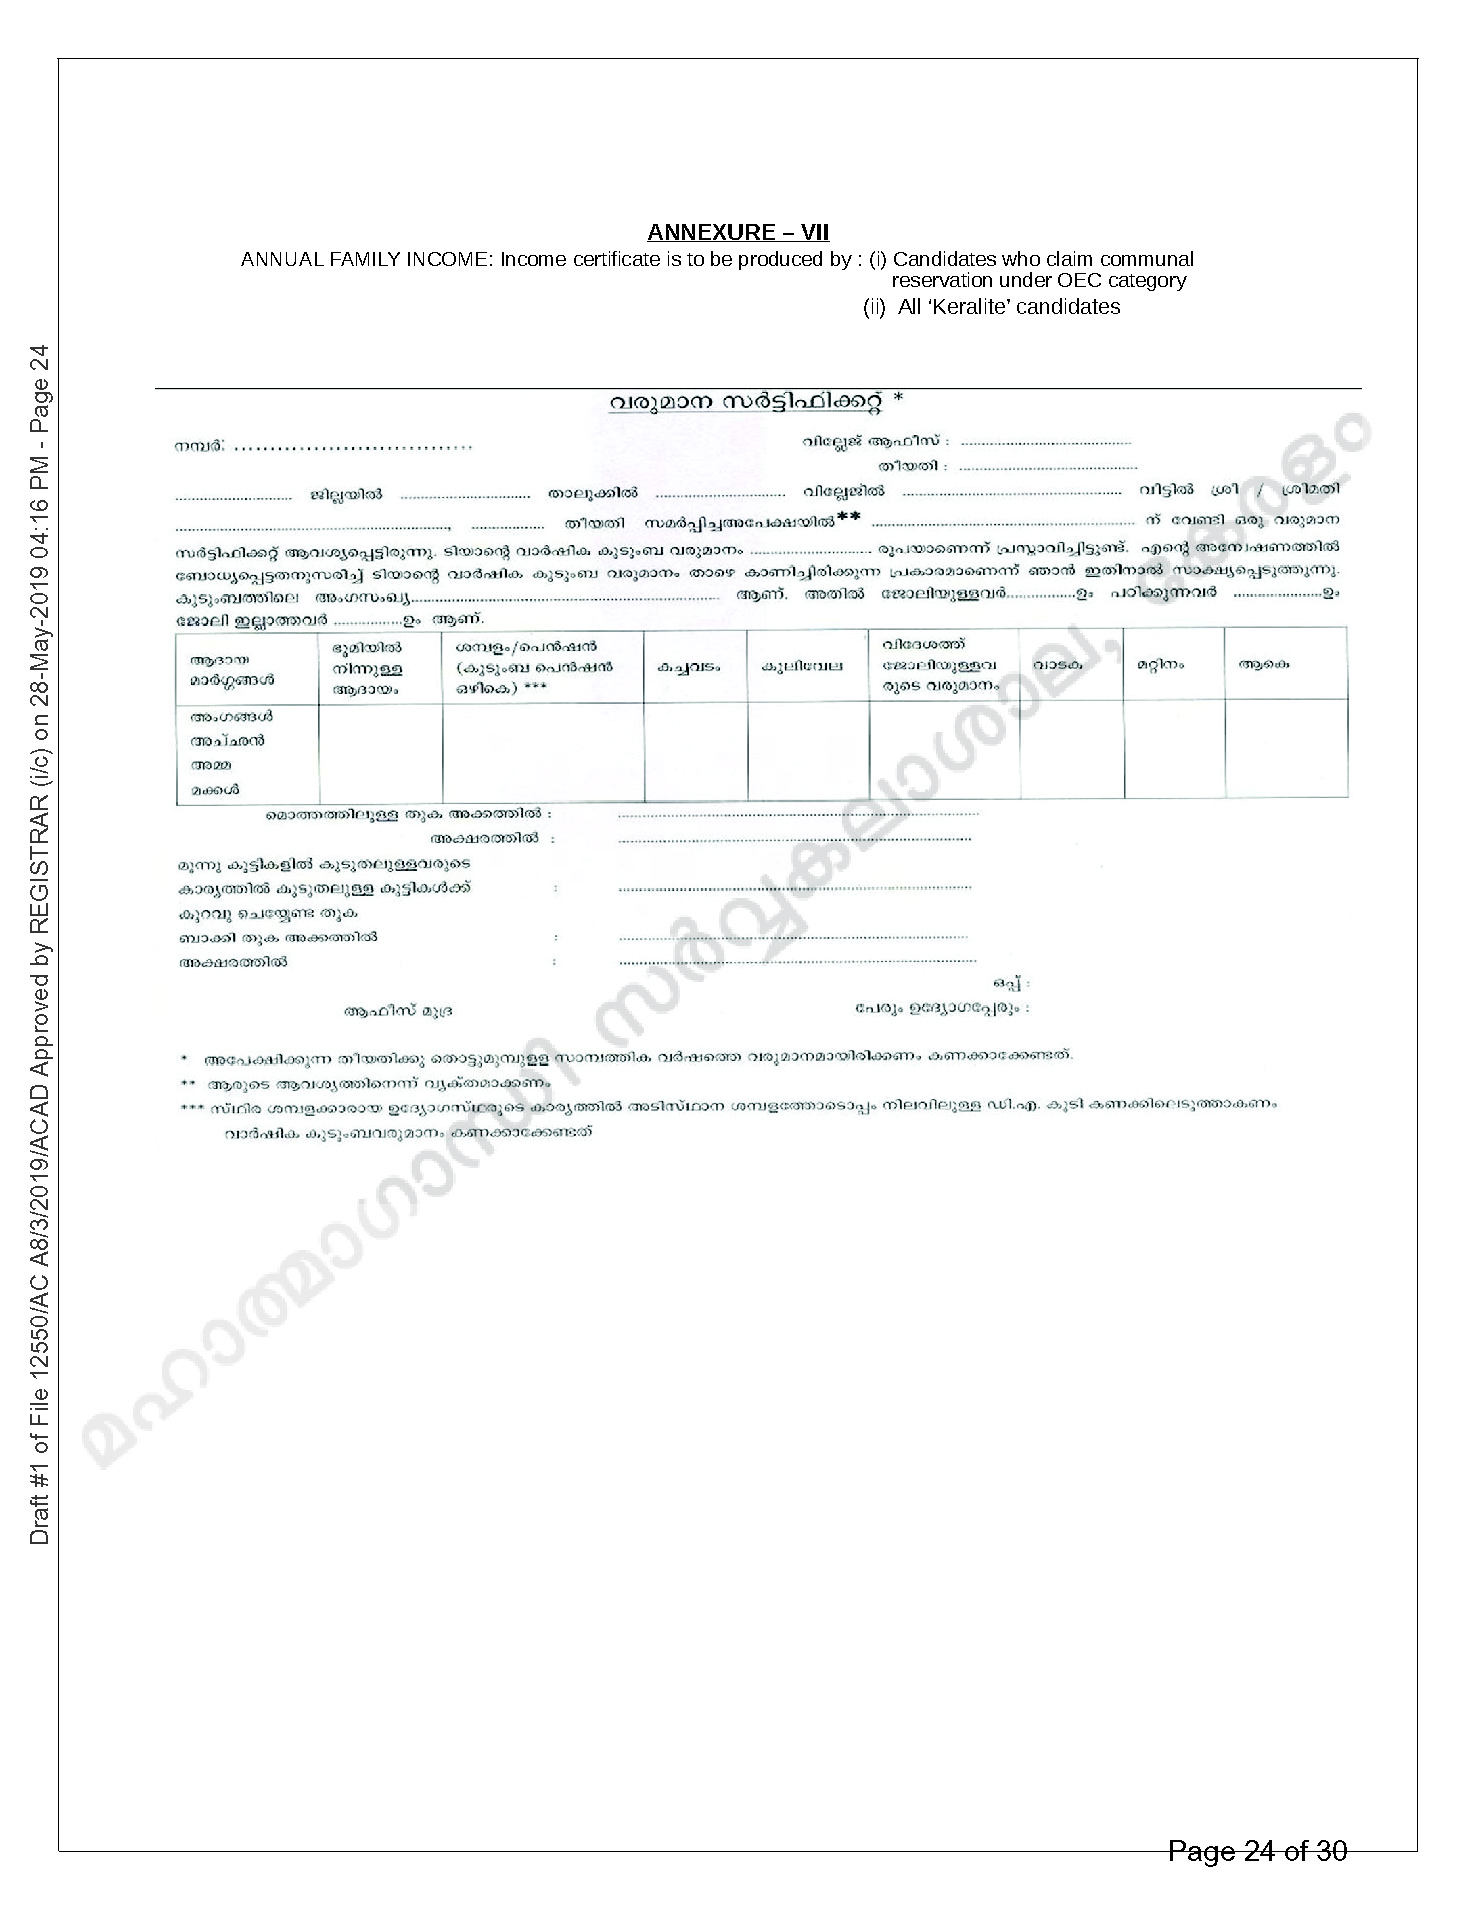 MG University B Ed Prospectus and Application form 2019 2020 - Notification Image 16